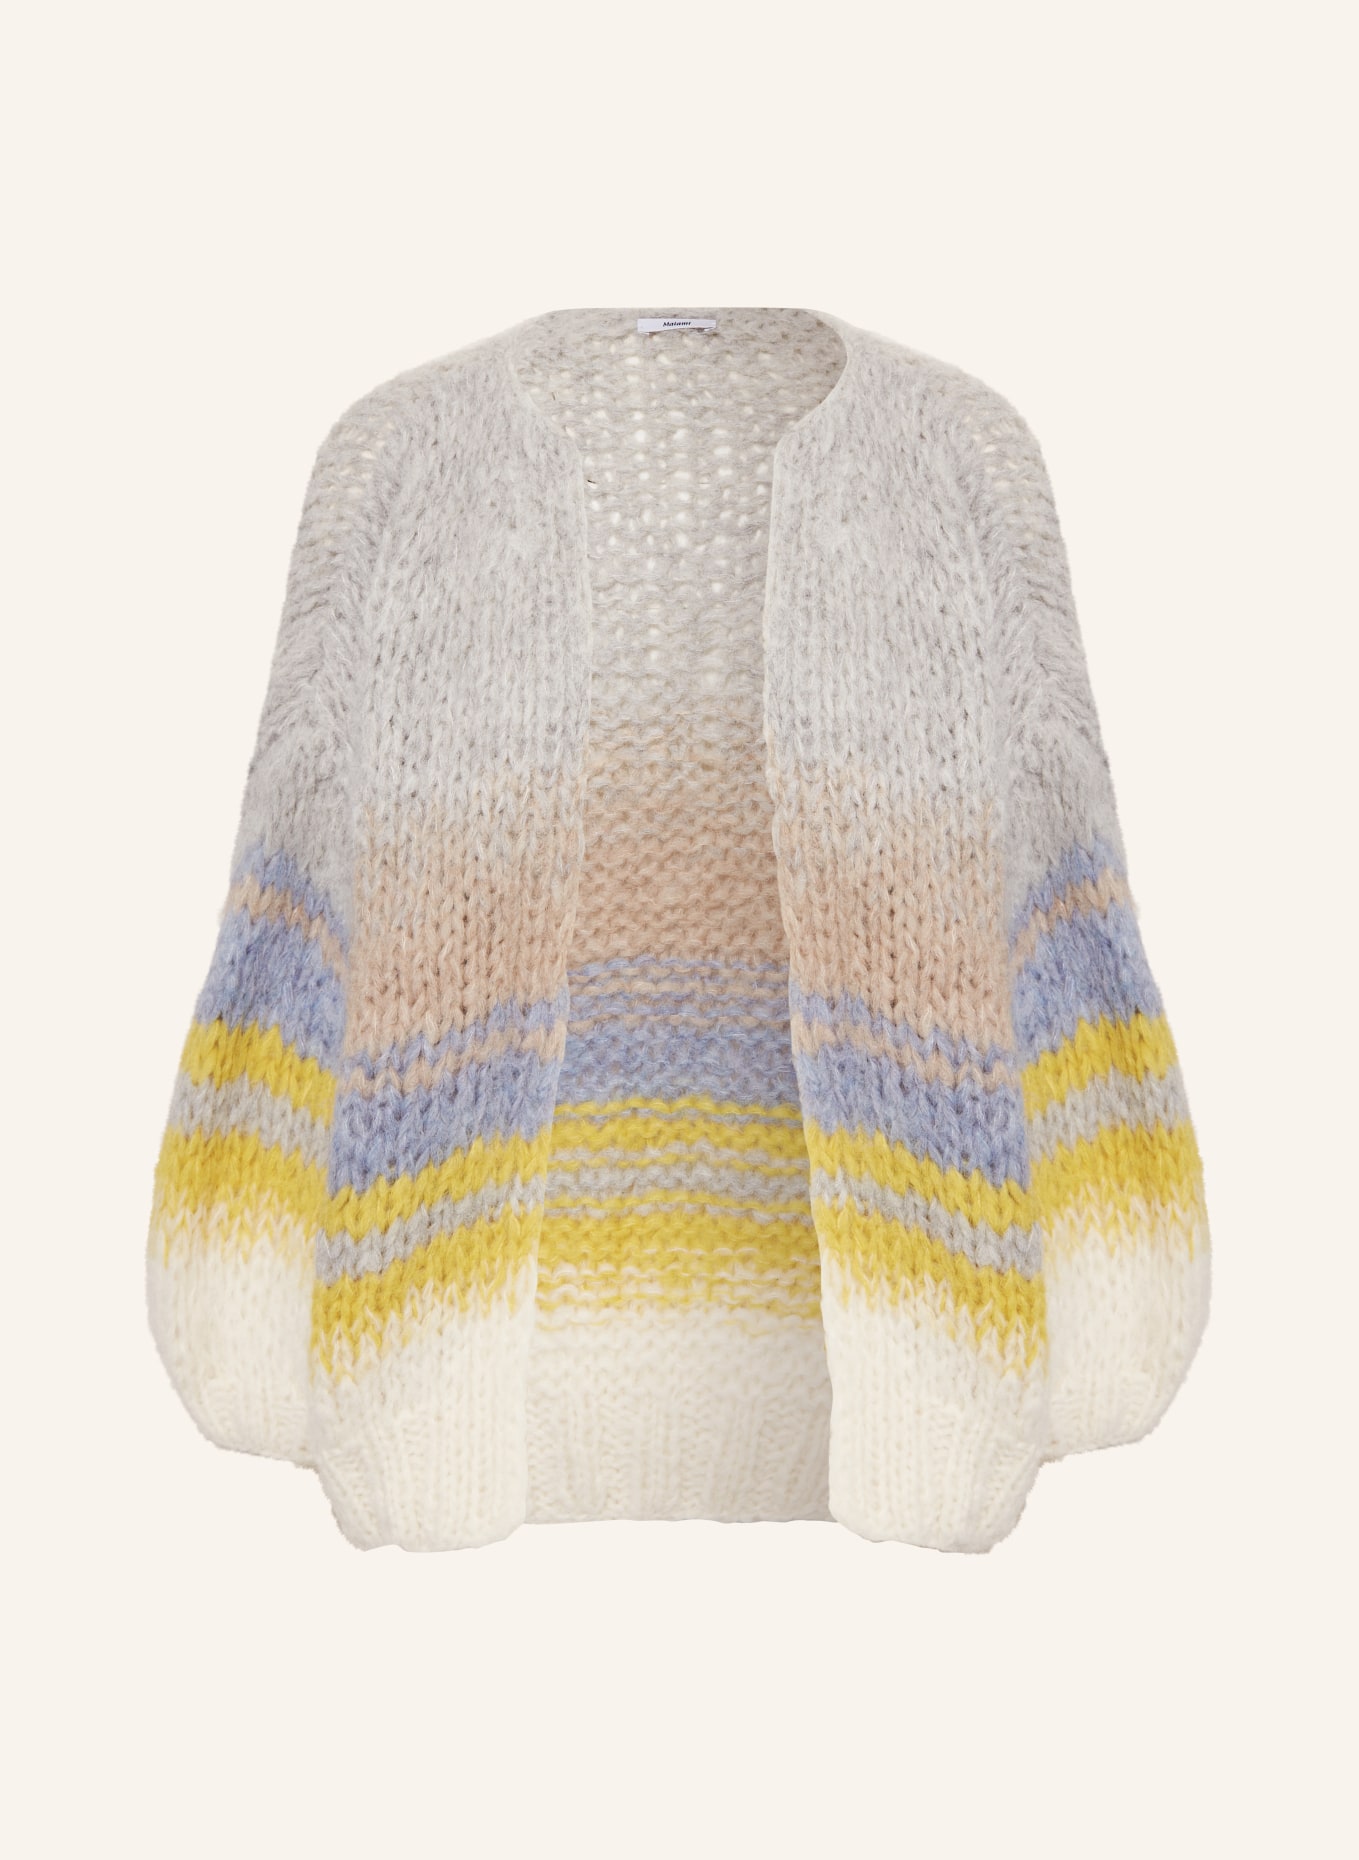 MAIAMI Knit cardigan made of alpaca, Color: LIGHT GRAY/ YELLOW/ GRAY (Image 1)